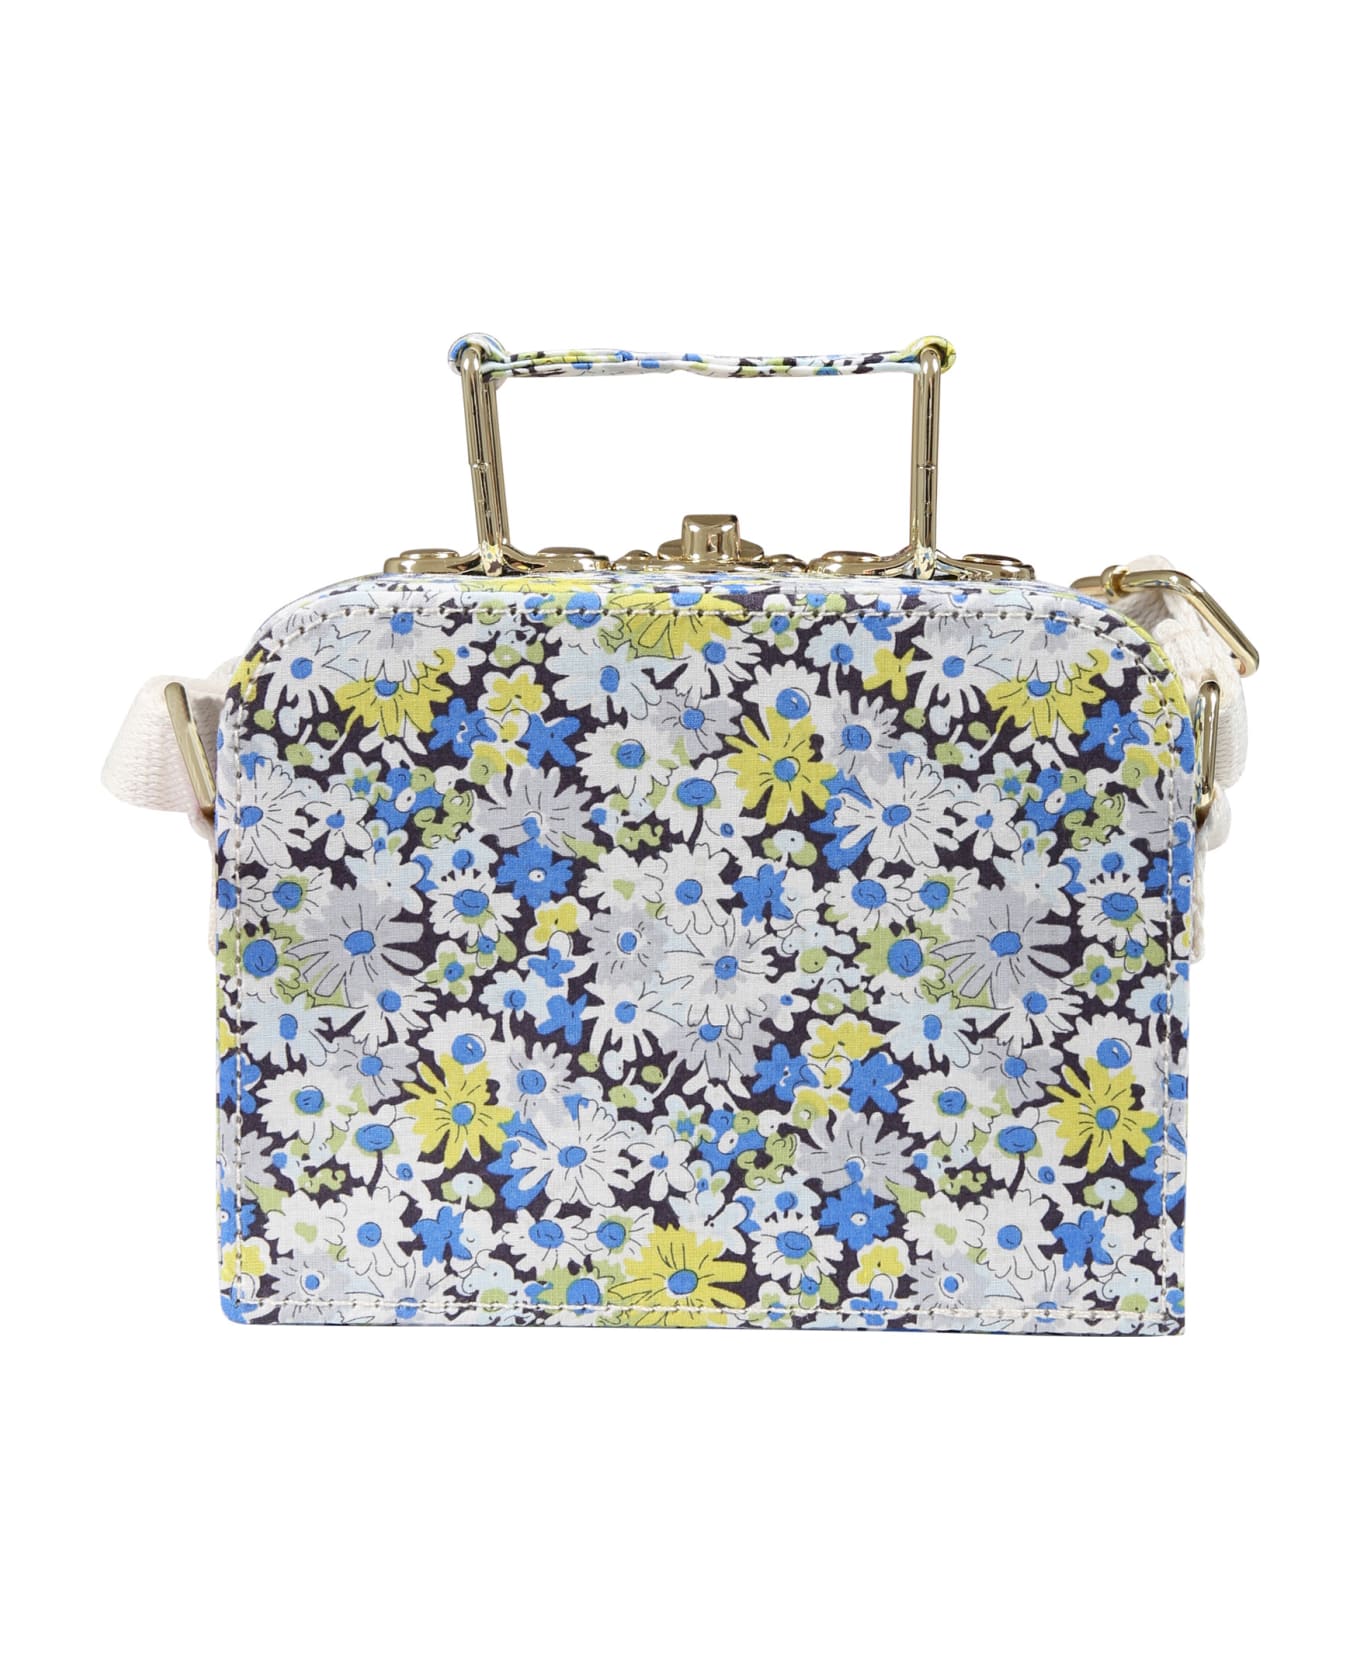 Bonpoint Light Blue Bag For Girl With Floral Pattern - Light Blue